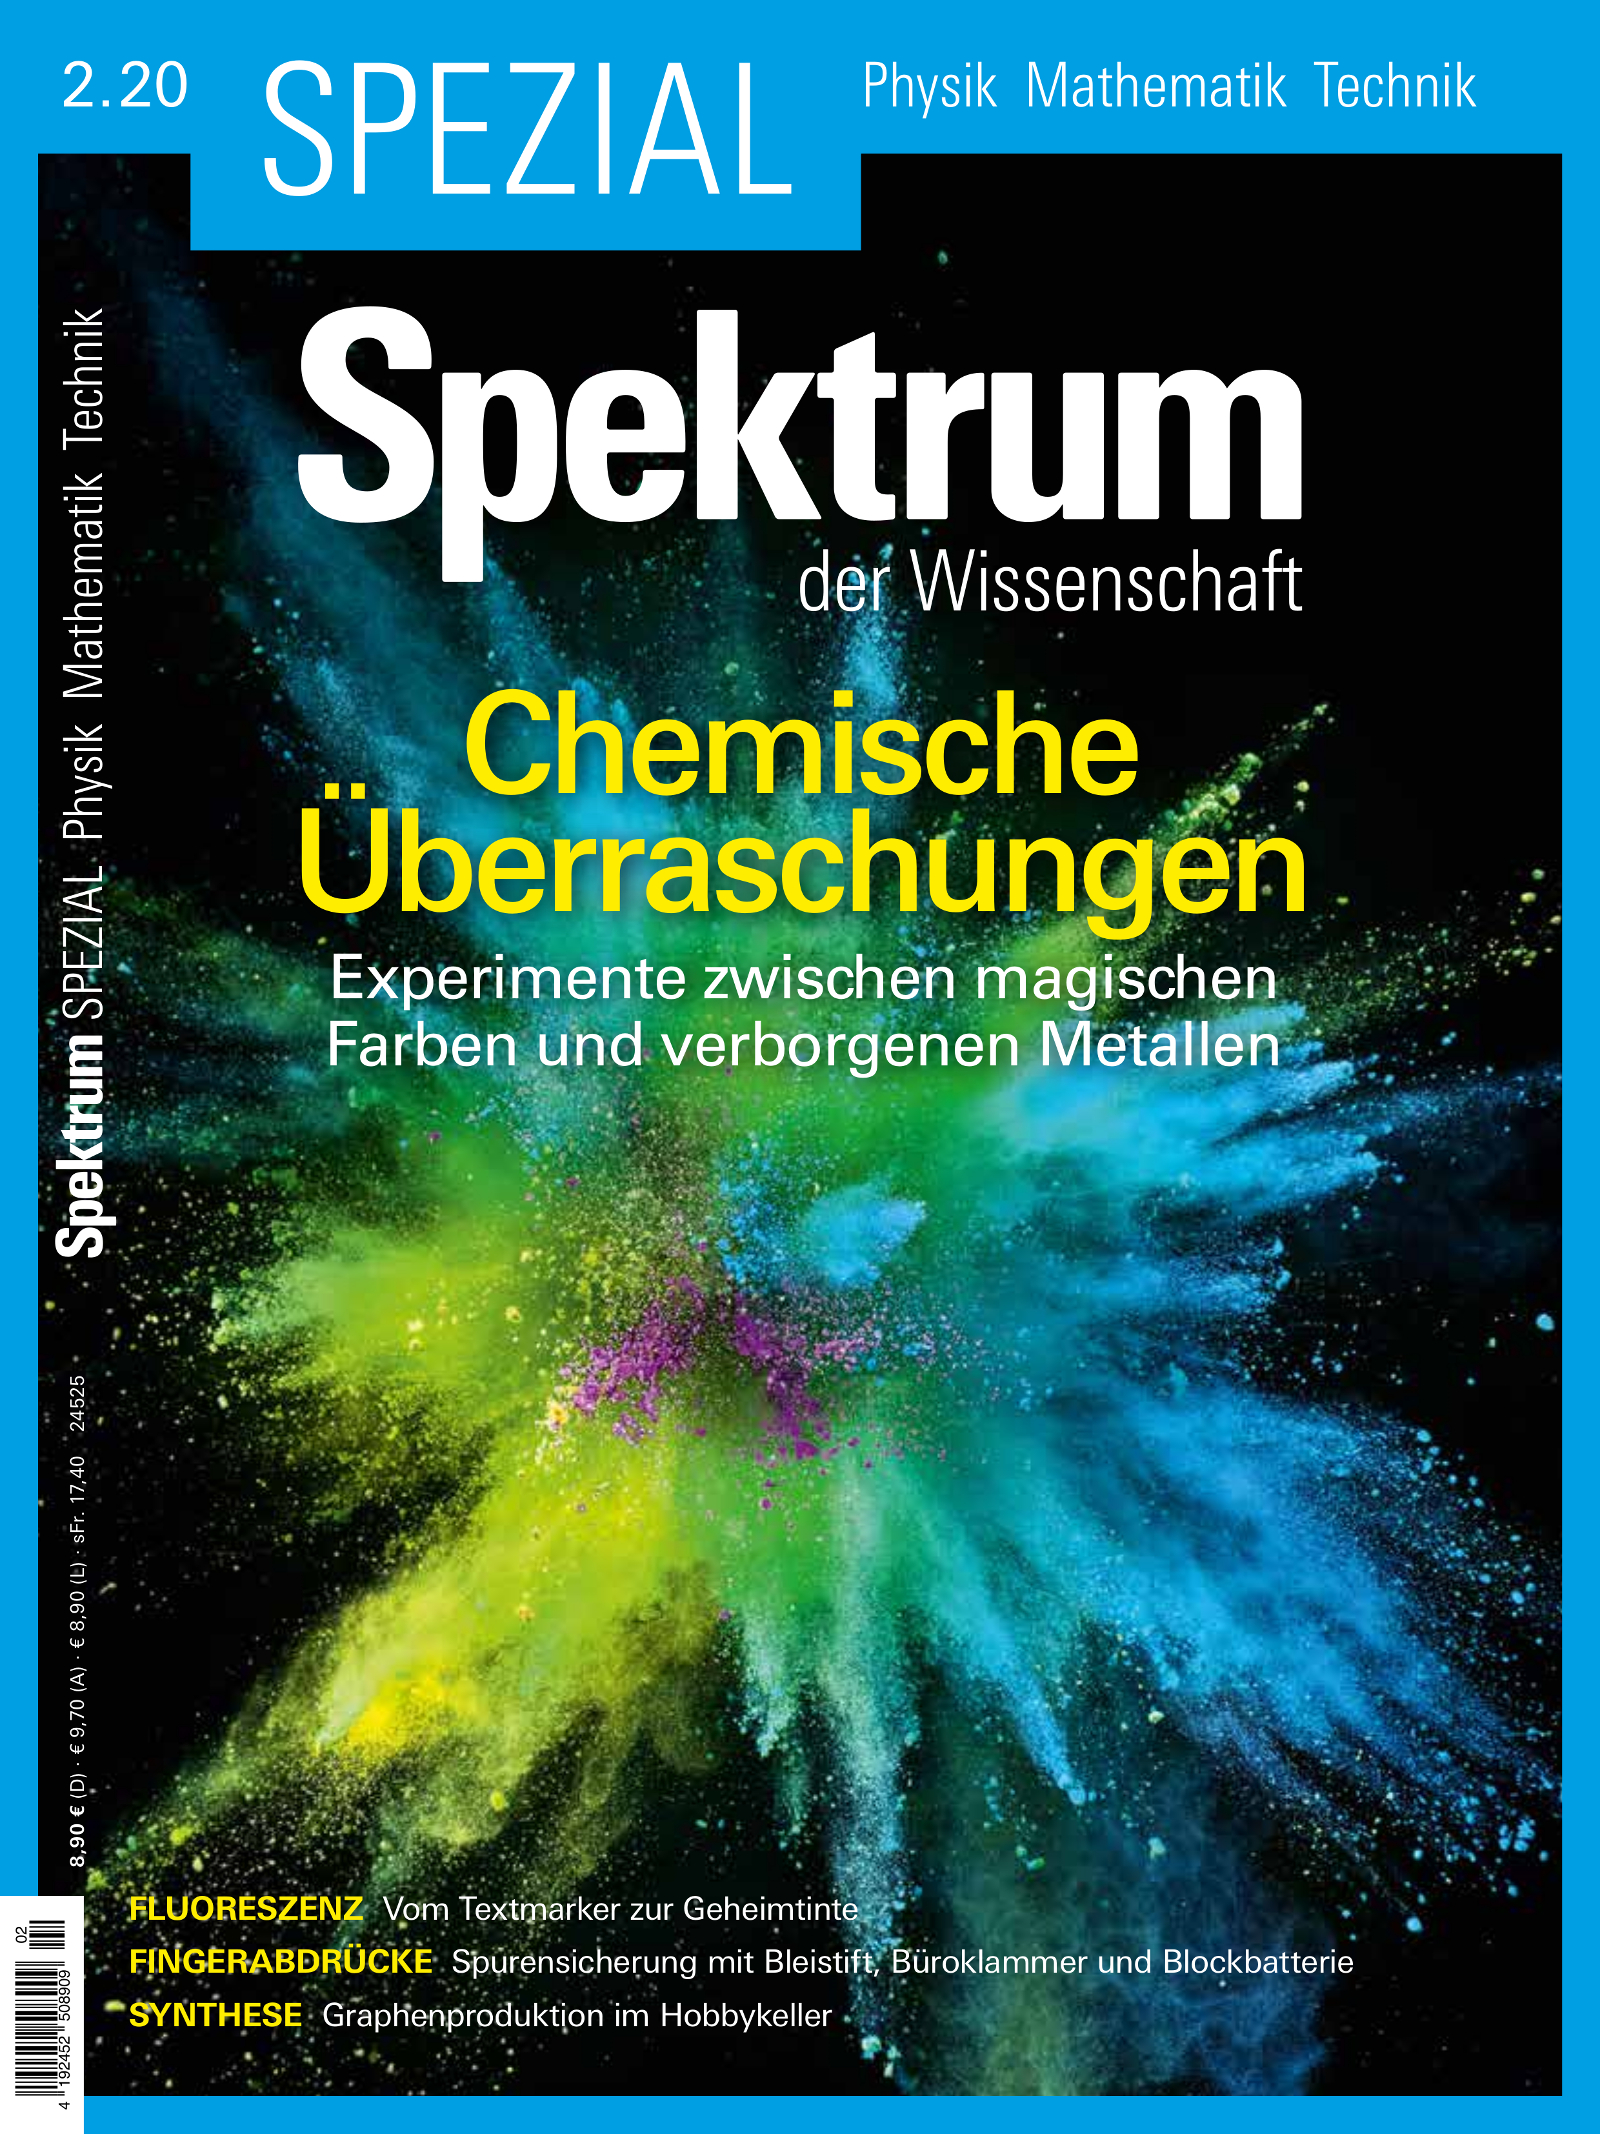 Spektrum Spezial Physik - Mathematik - Technik 2/2020 Cover